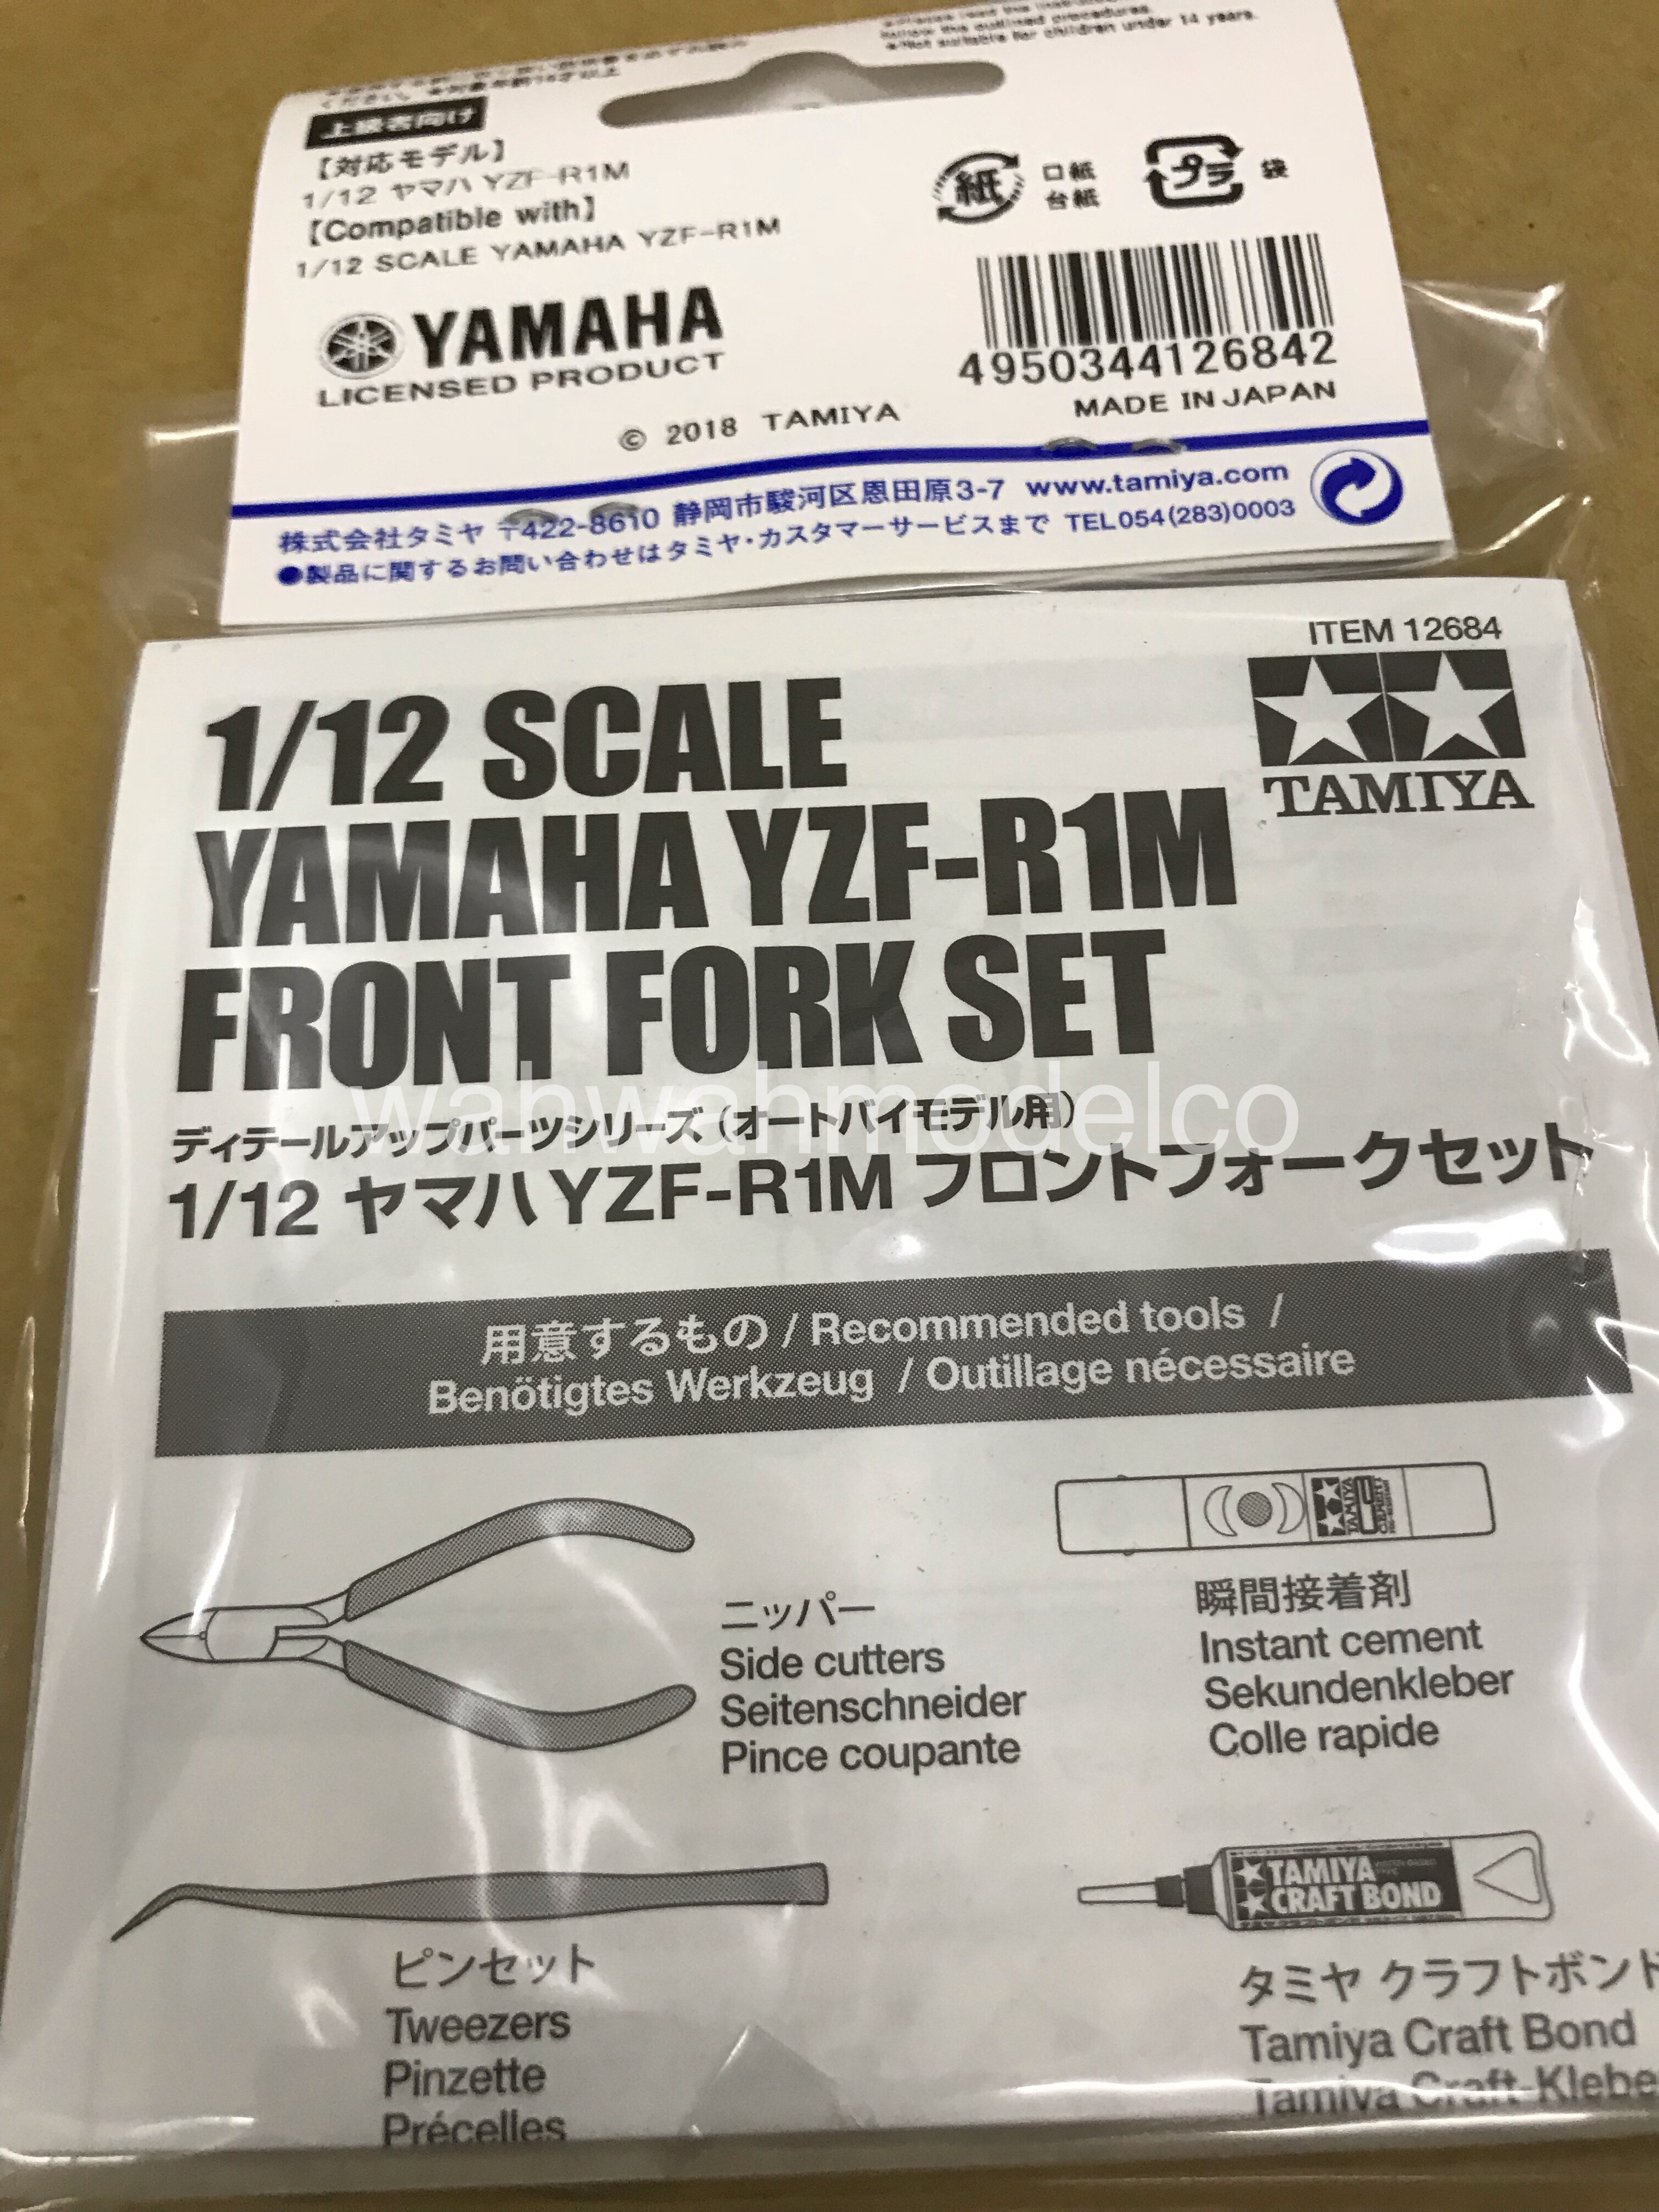 Tamiya 12684 Yamaha YZF-R1M Front Fork Set 1/12 Scale 